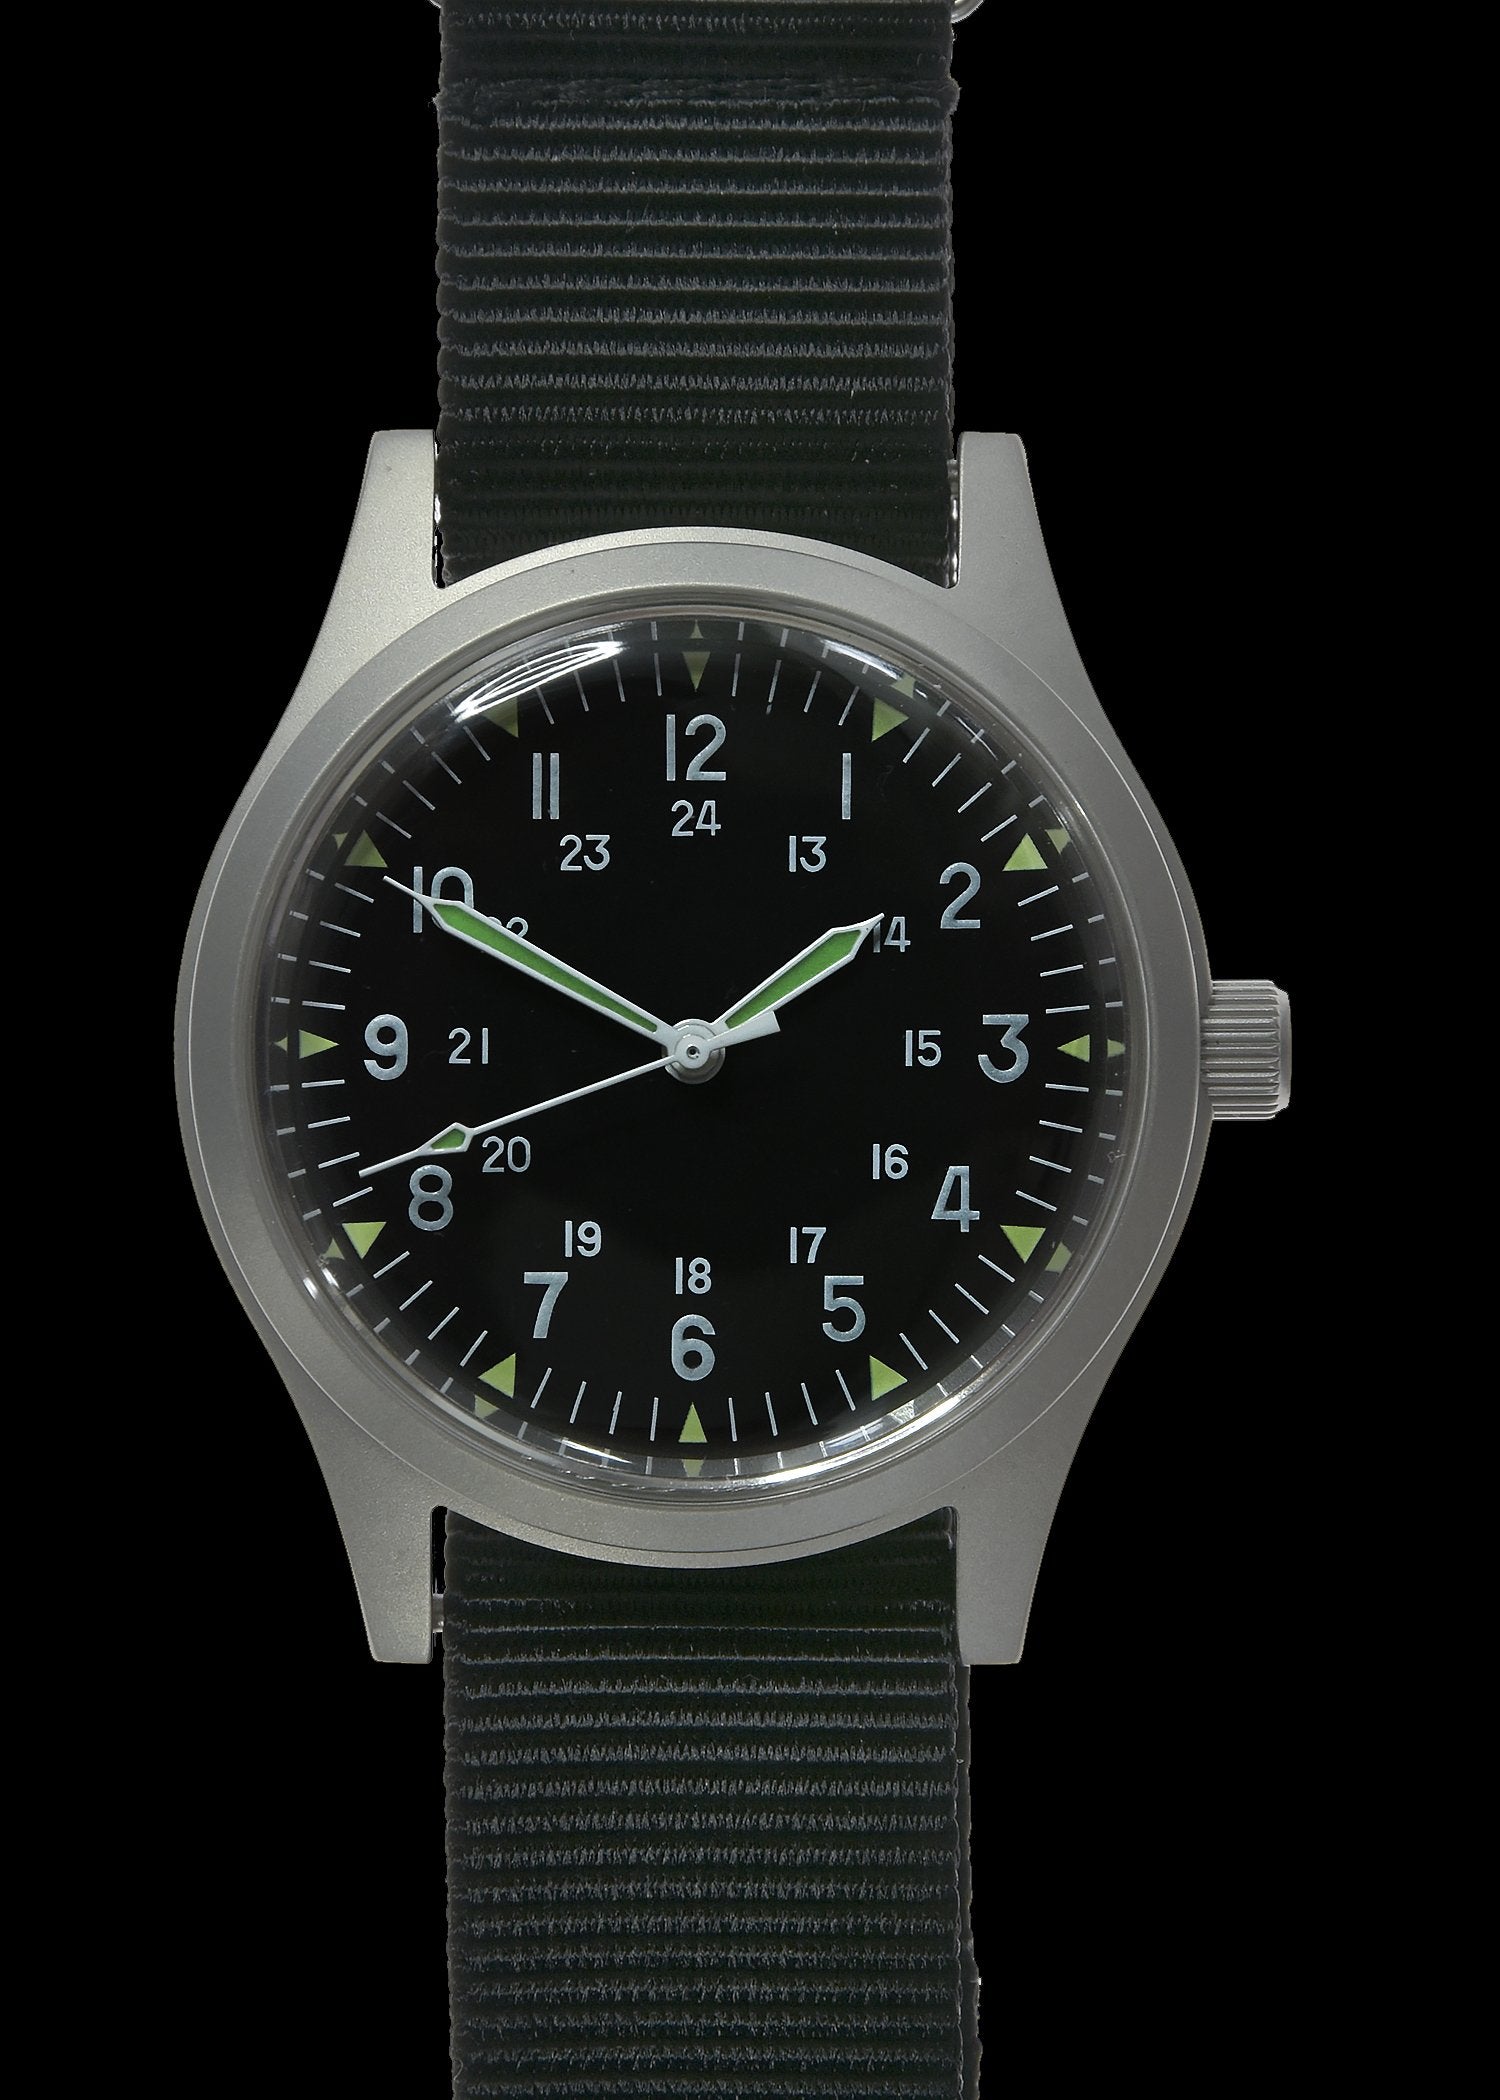 GG-W-113 US 1960s Pattern Watch (Automatic or Quartz)